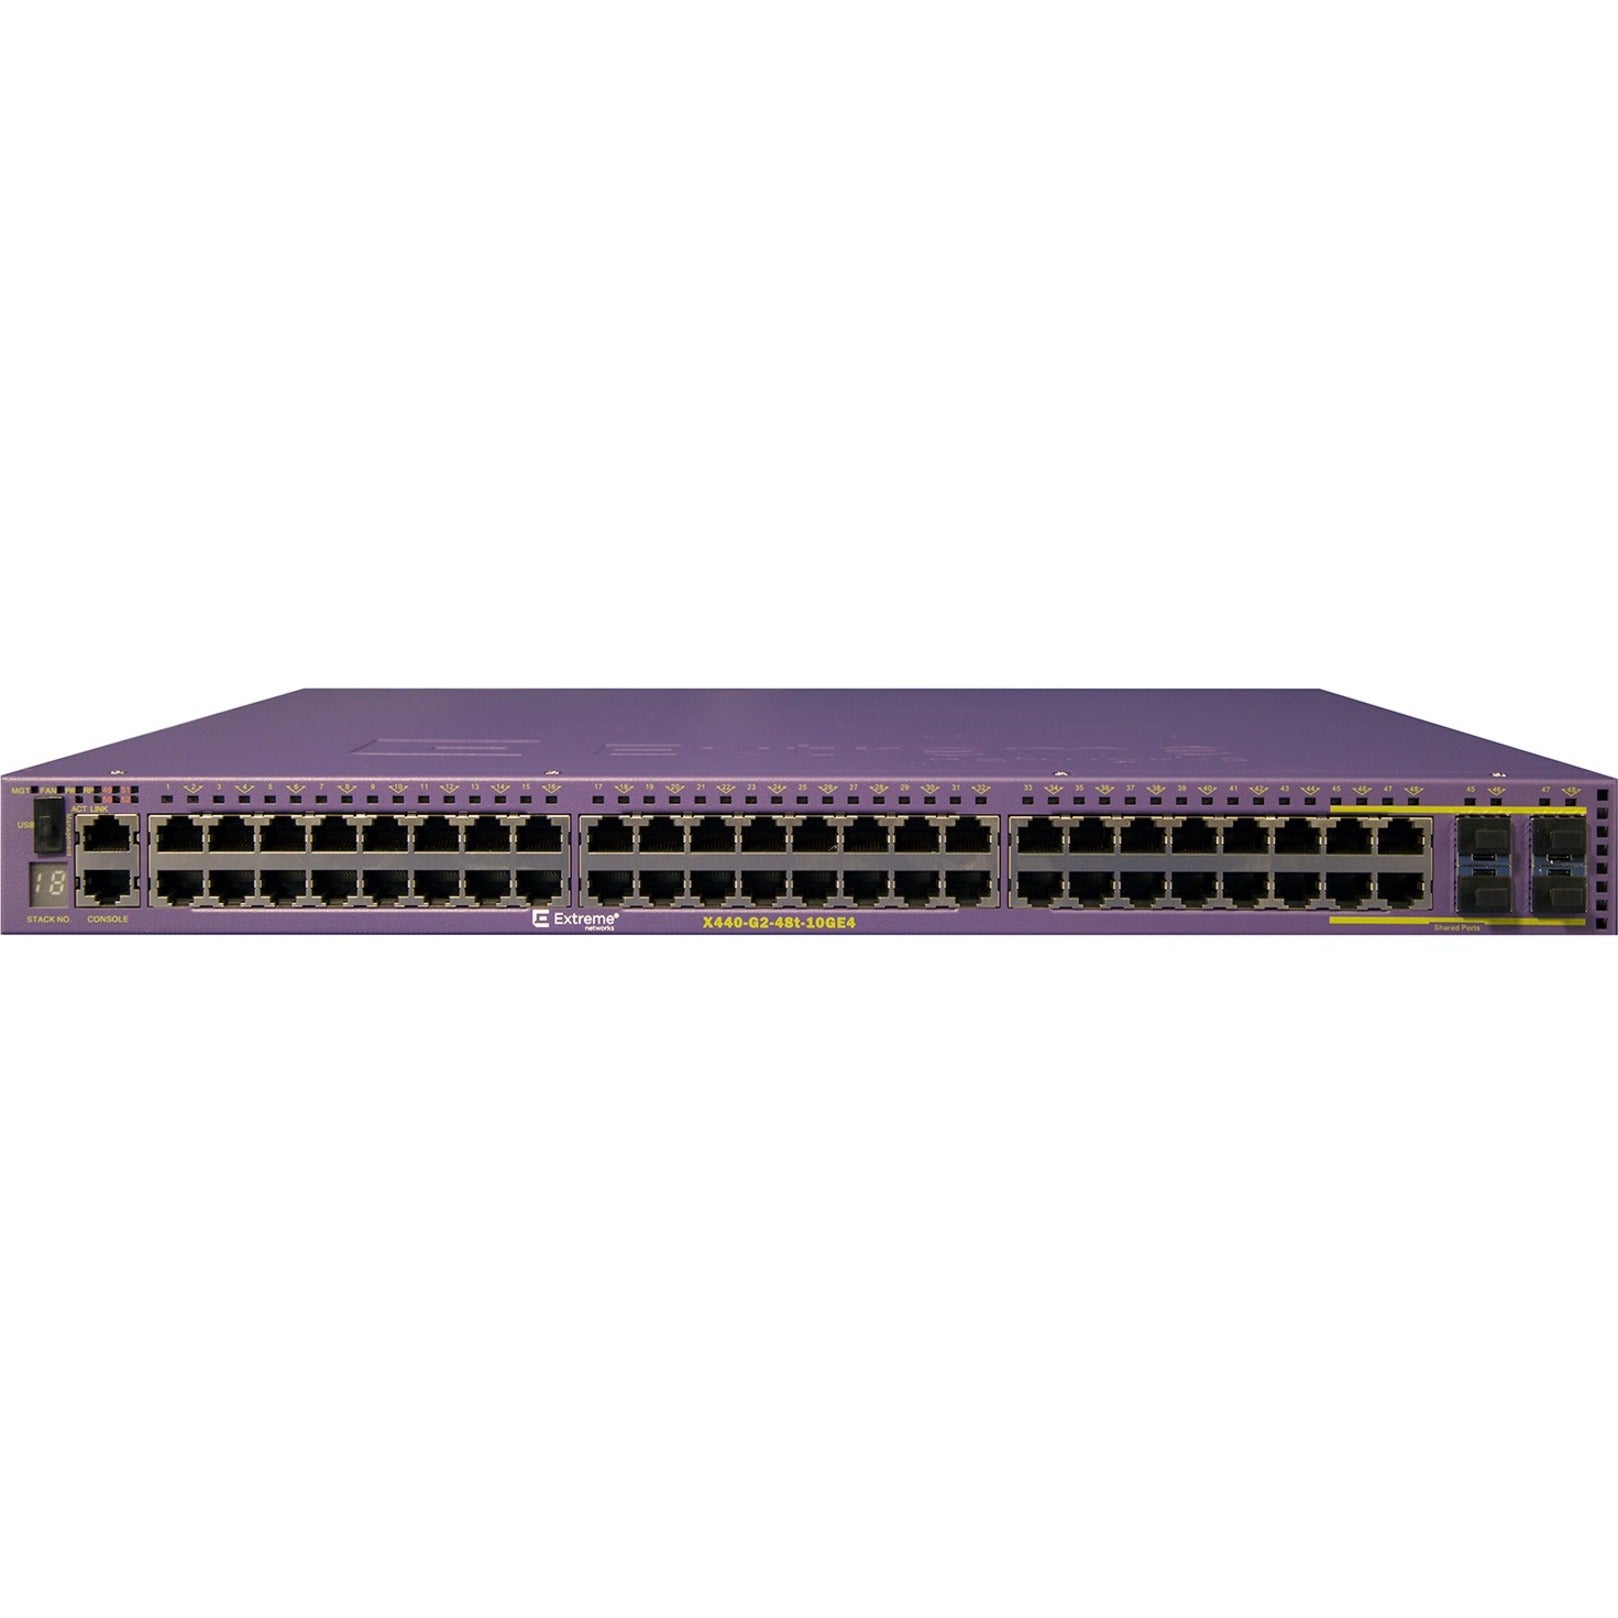 Extreme Networks 16534 X440-G2-48t-10GE4 Ethernet Switch Gigabit Ethernet 48 Network Ports  Ekstreme nettverk 16534 X440-G2-48t-10GE4 Ethernet-bryter Gigabit Ethernet 48 nettverksporter